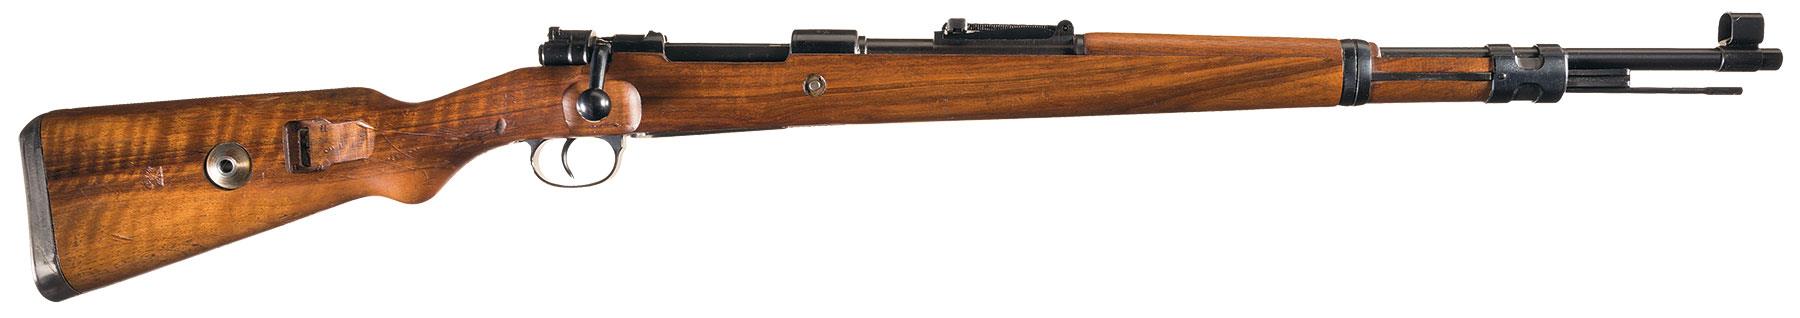 Mauser K98k Bolt Action Rifle Portuguese contract Mauser K98k Rifle (Portug...